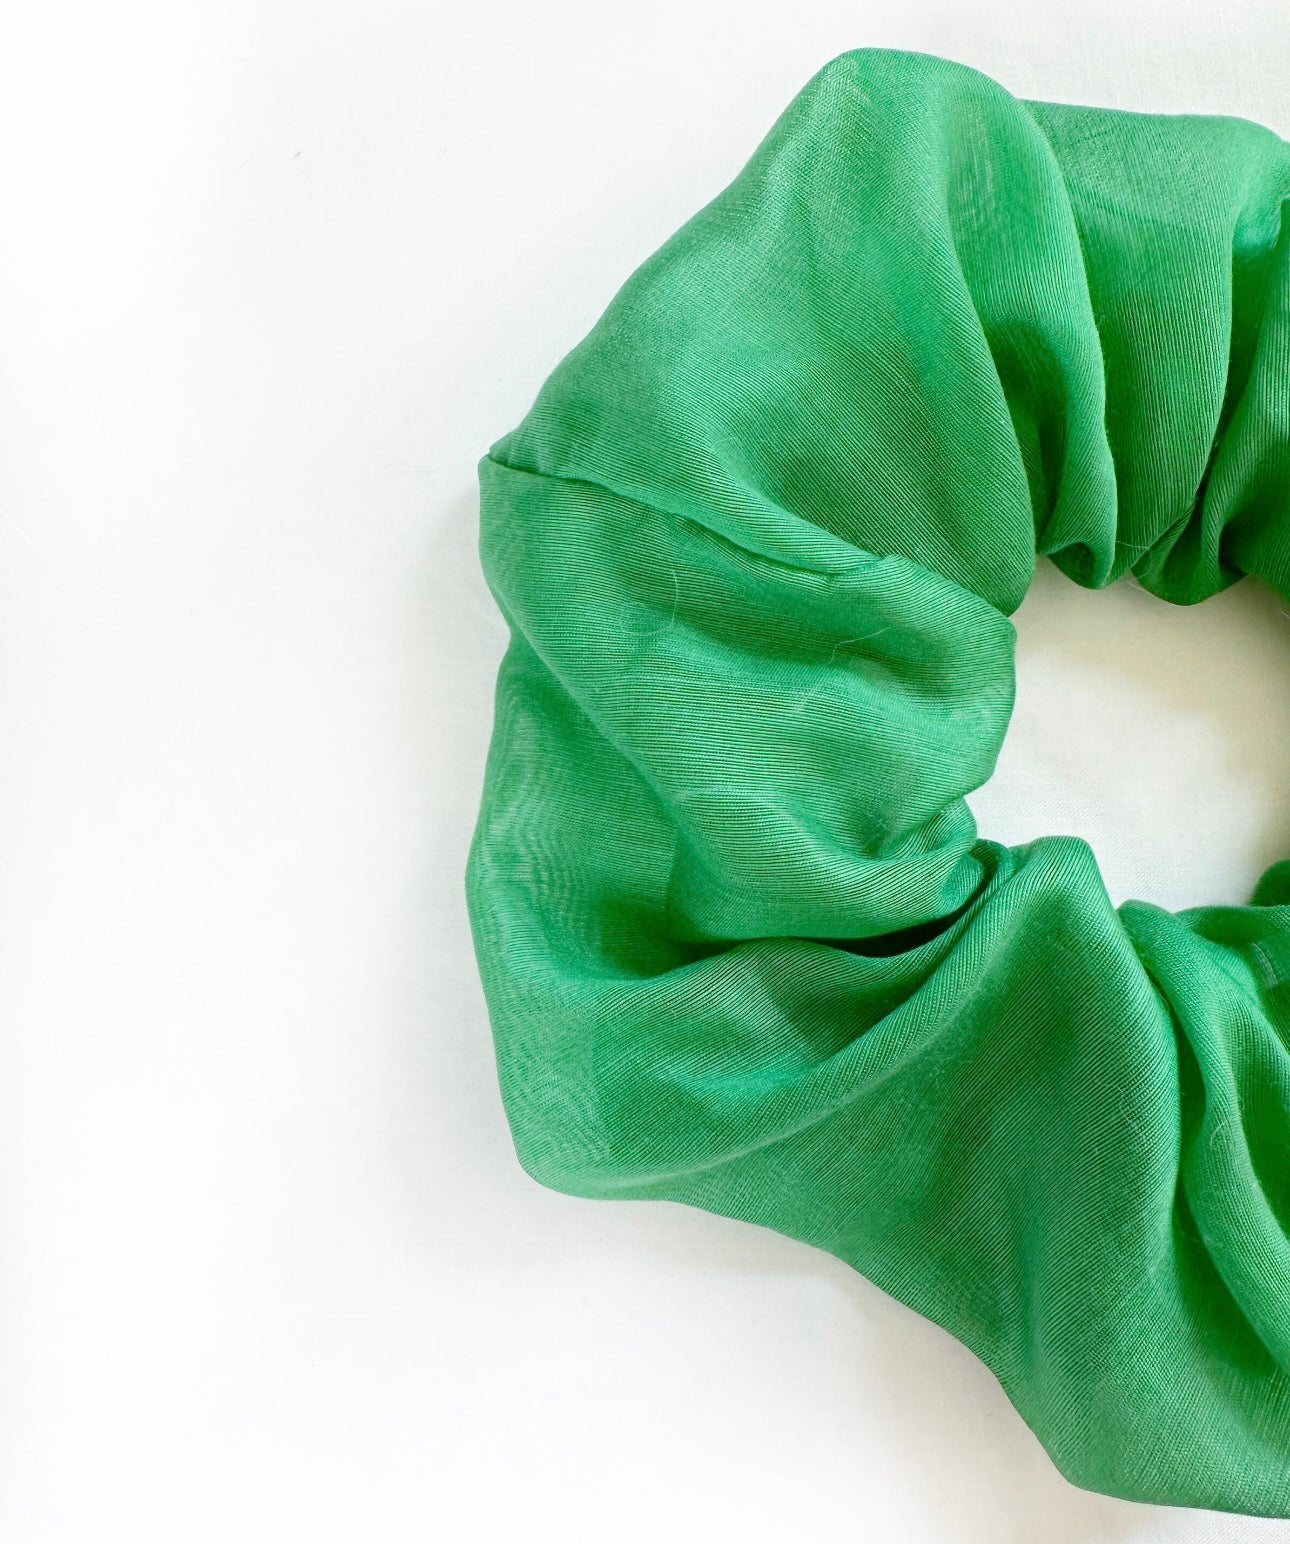 Oversized Scrunchie in Green